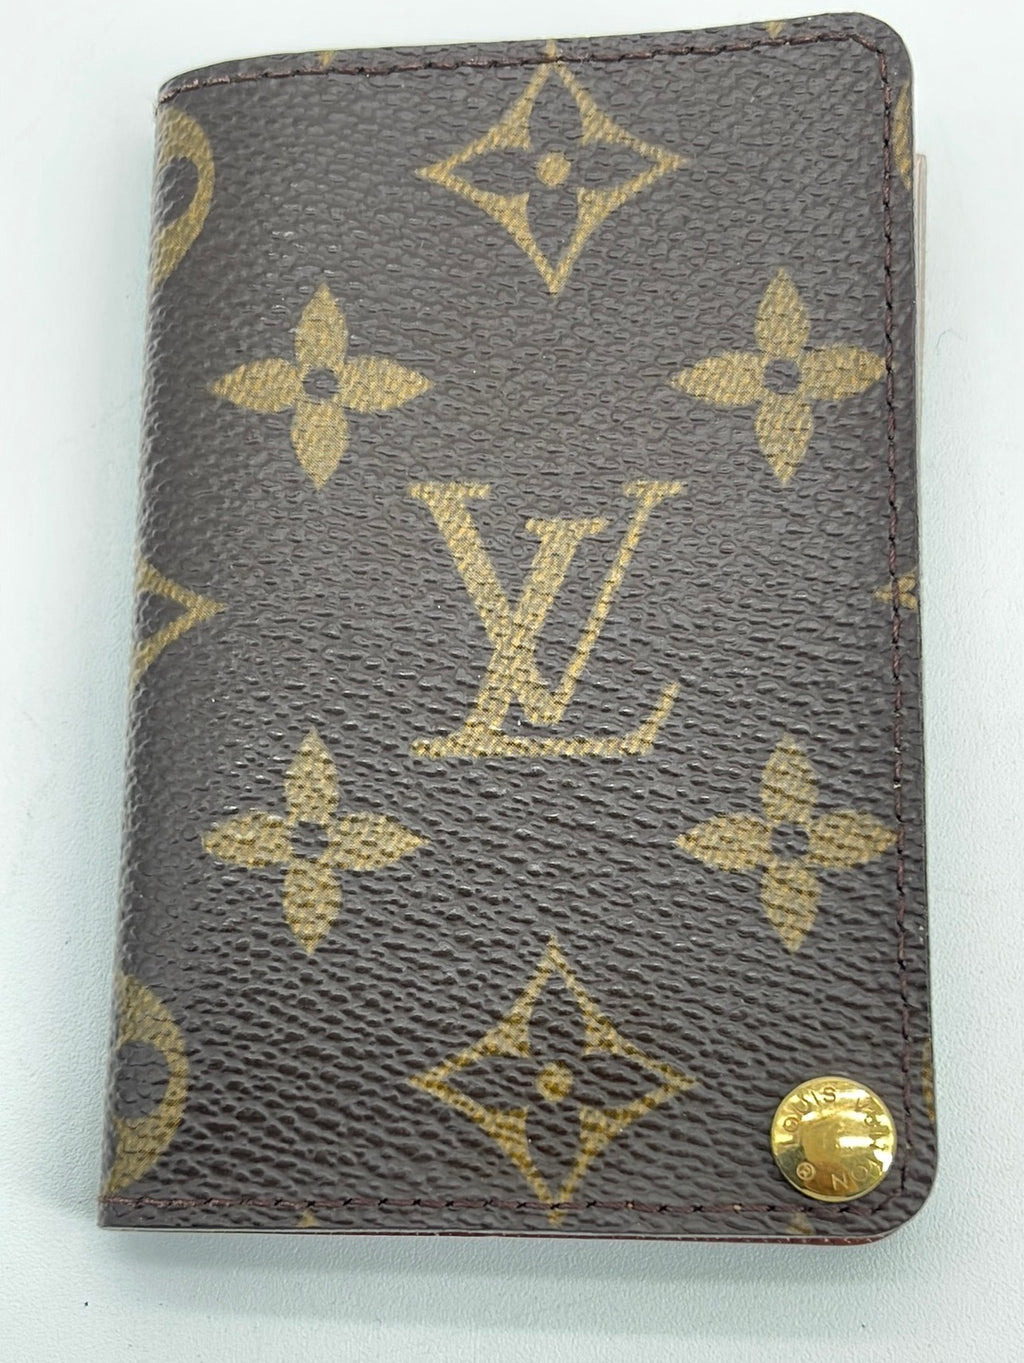 Preloved Louis Vuitton Monogram e Messenger Bag TH0059